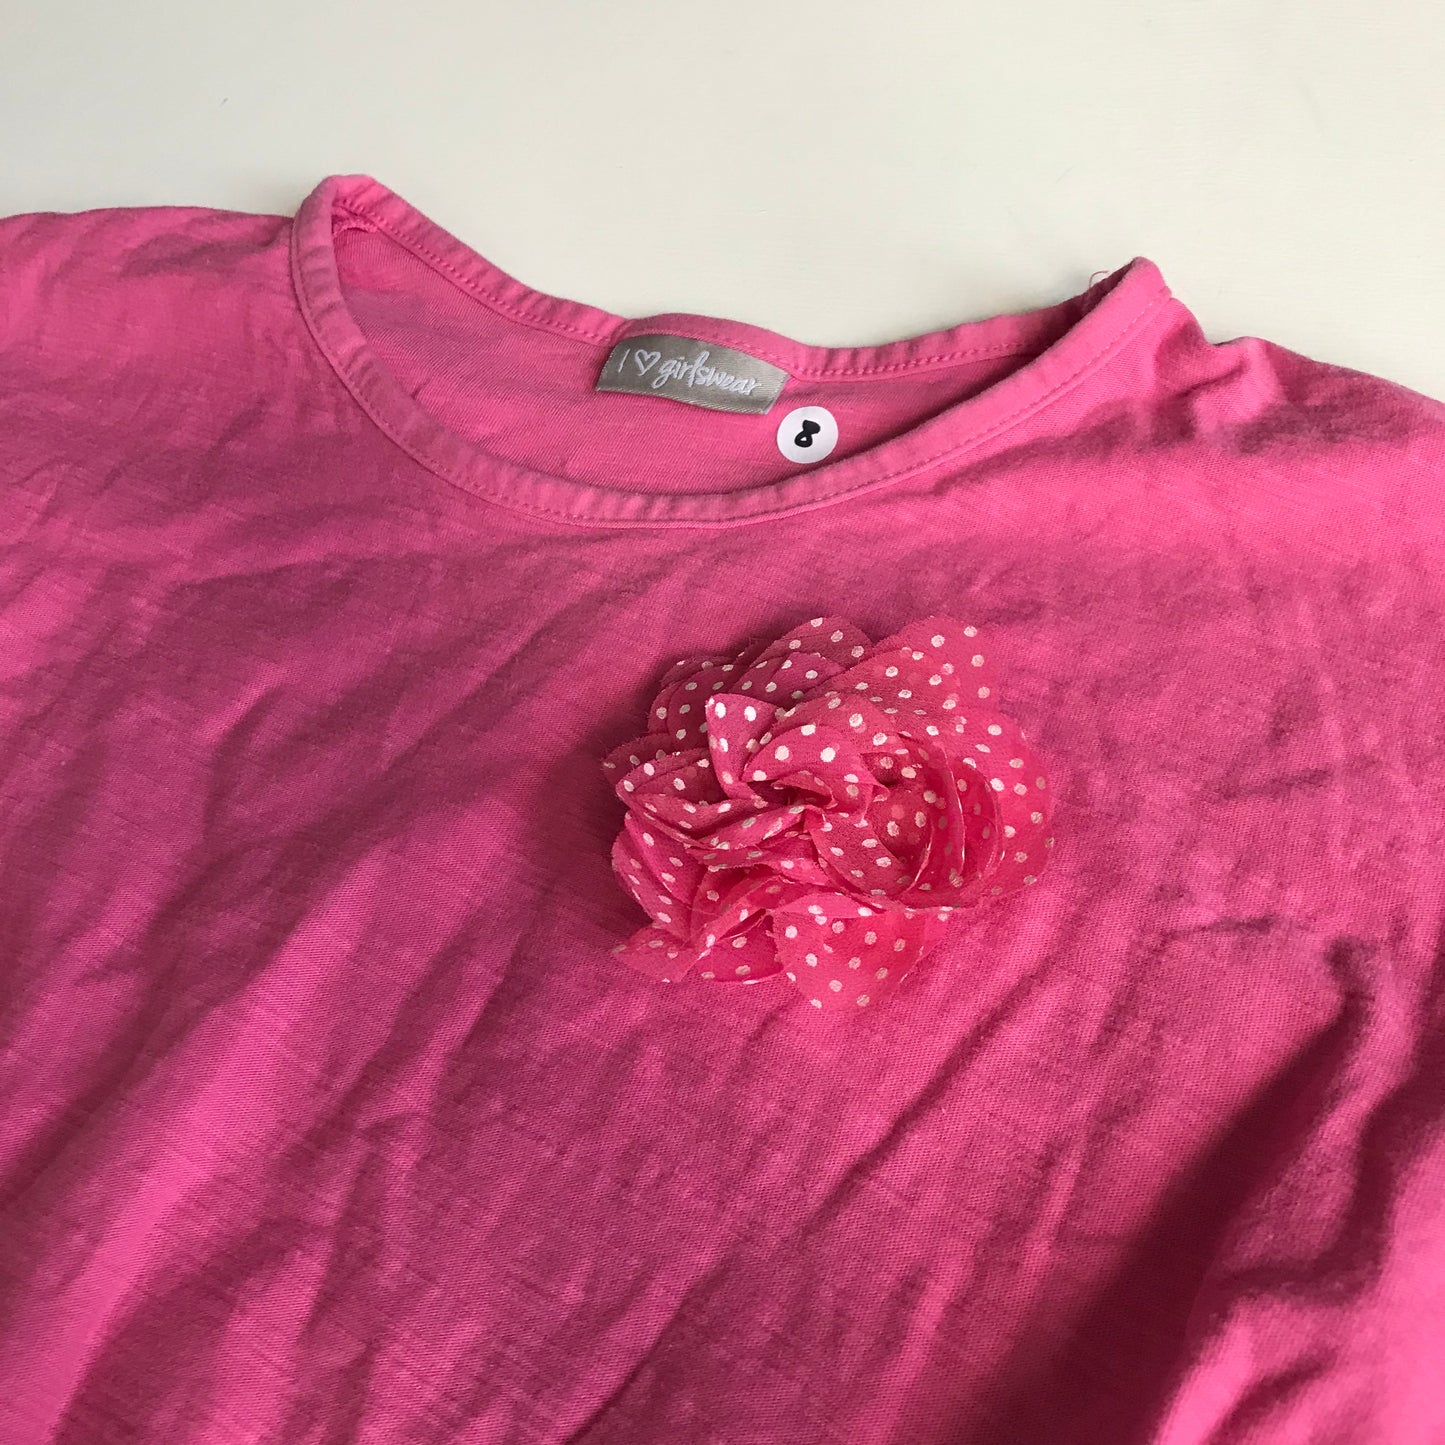 Dress - Pink With Fringe Hem - Age 8